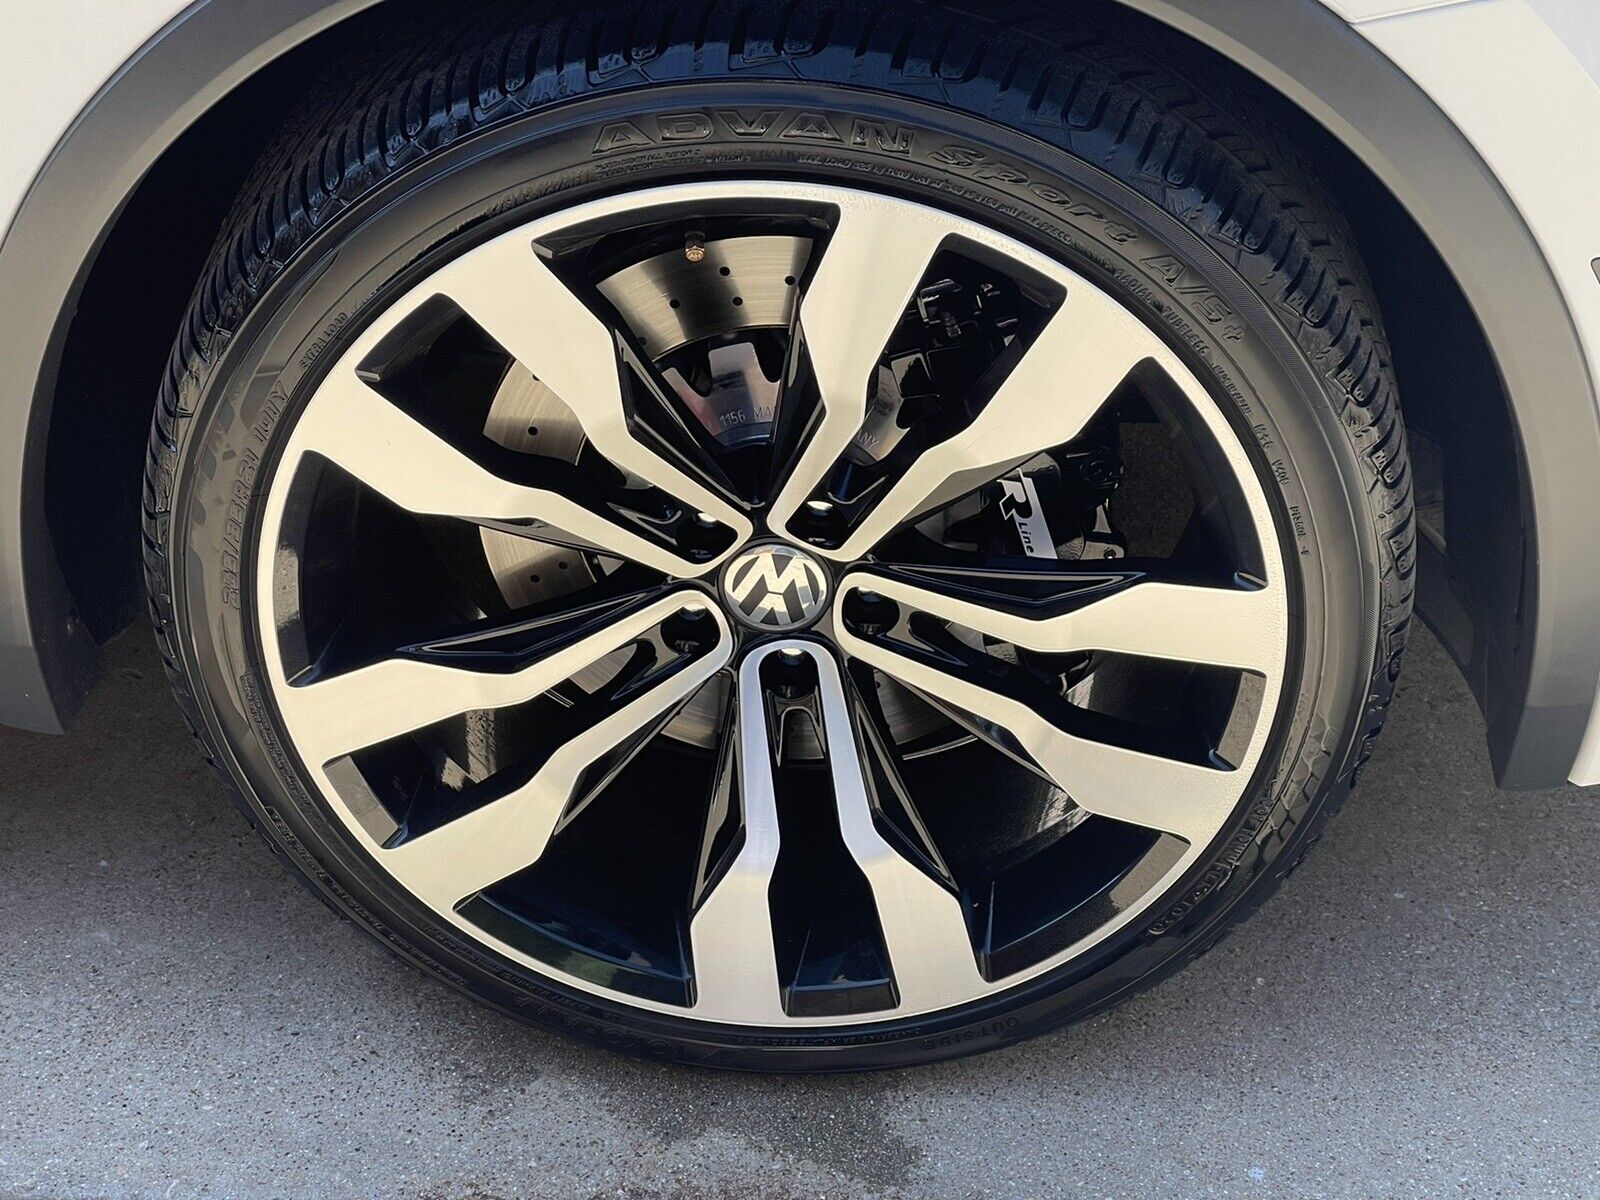 21x9.5 Suzuka VW Tiguan wheels and tires